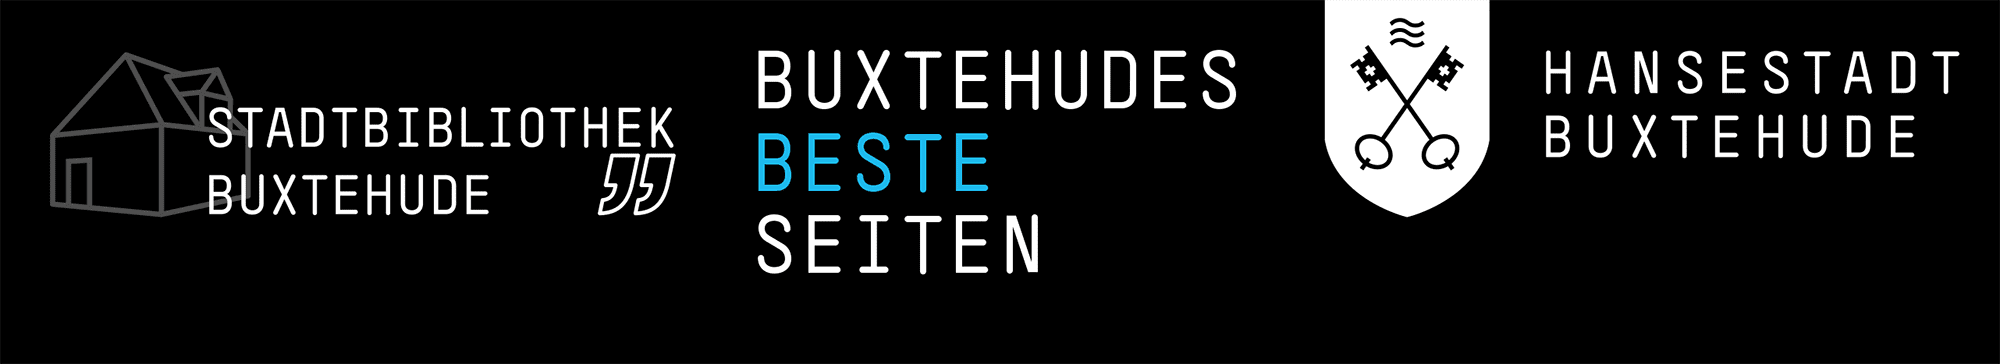 Stadtbibliothek Buxtehude